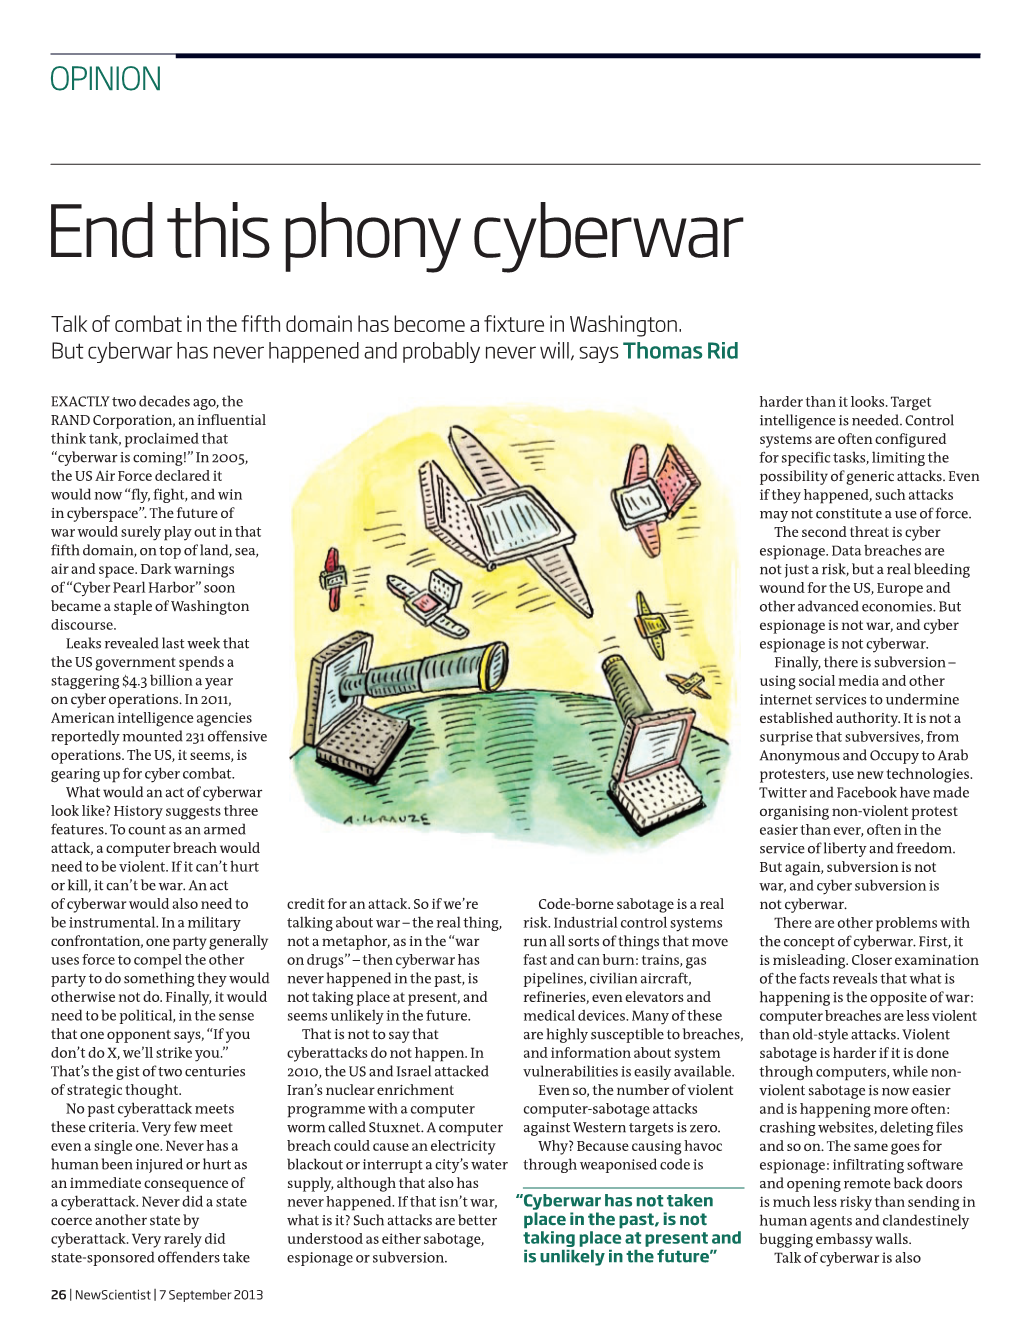 End This Phony Cyberwar